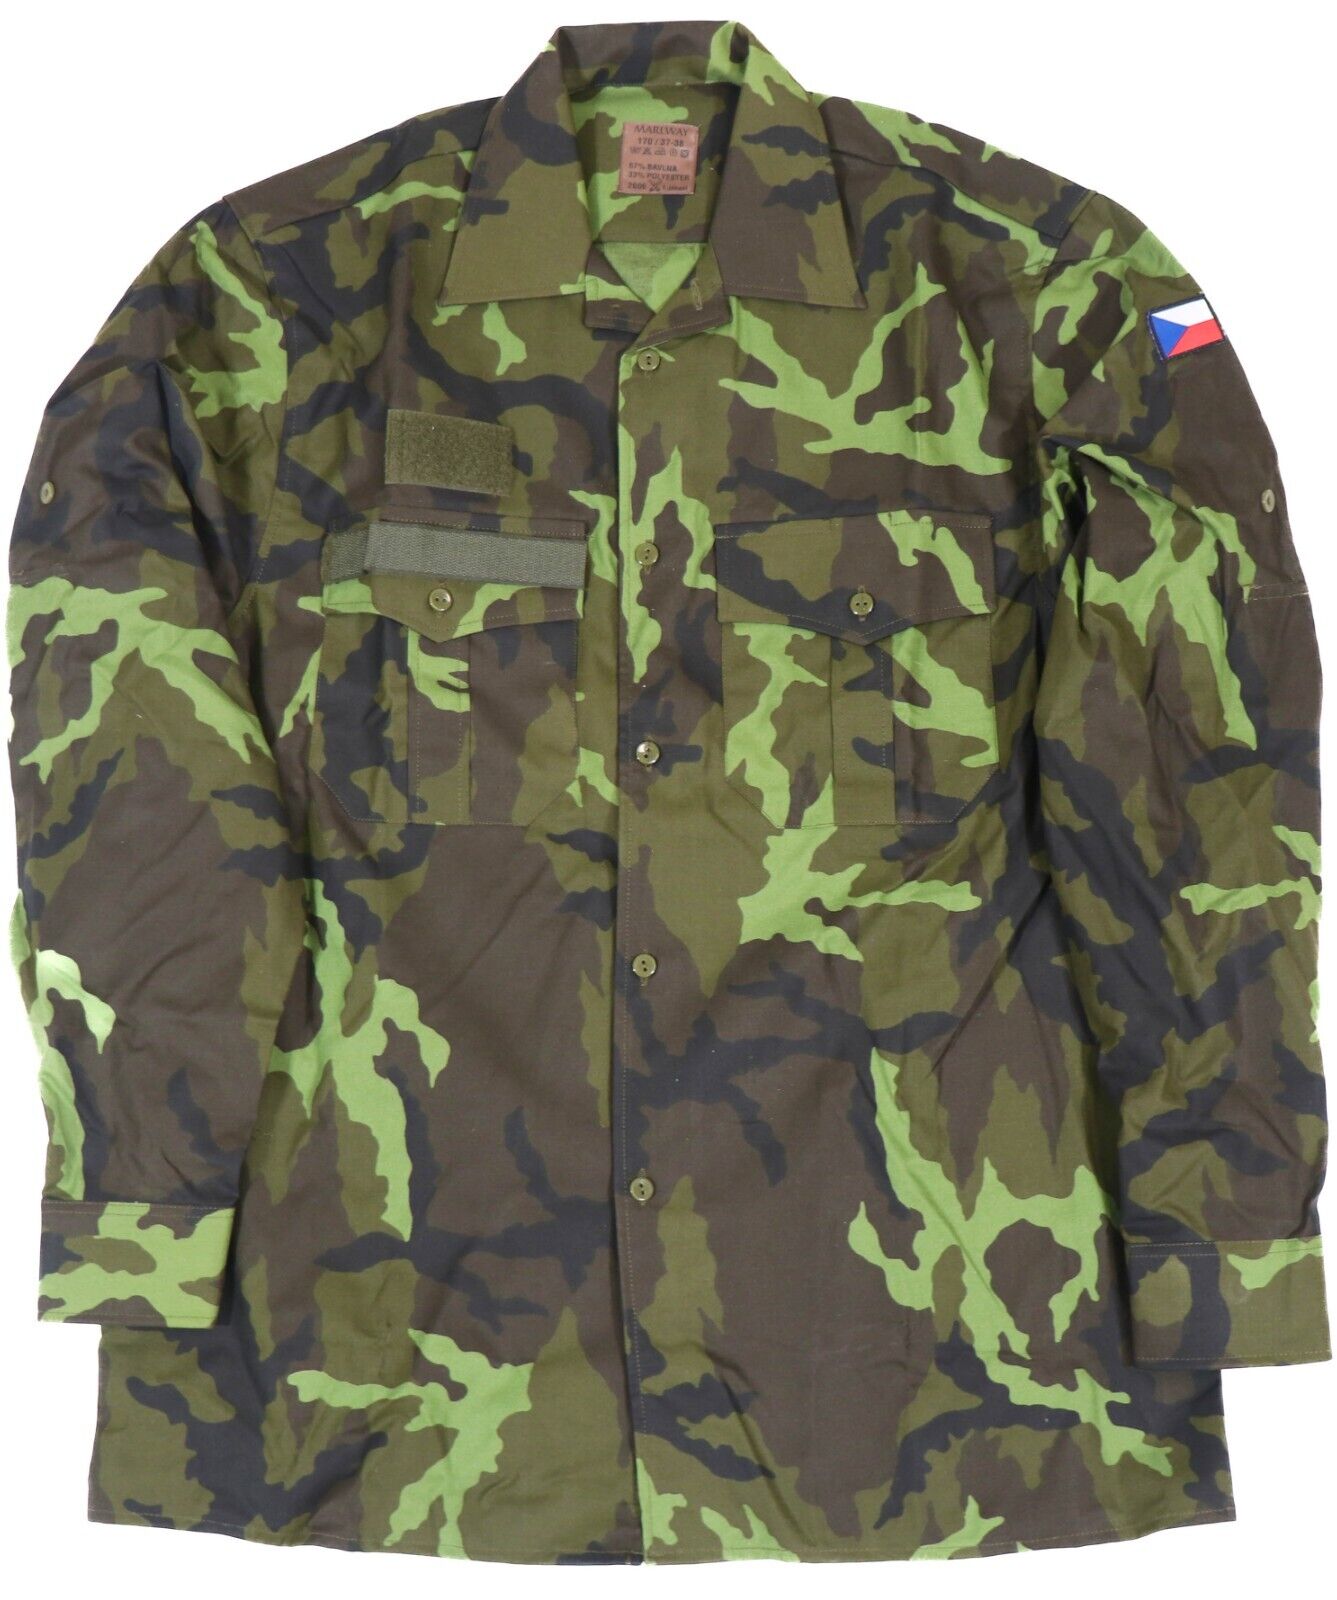 Medium - Czech Army M95 Woodland Camo Combat Shirt Military Lightweight Jacket